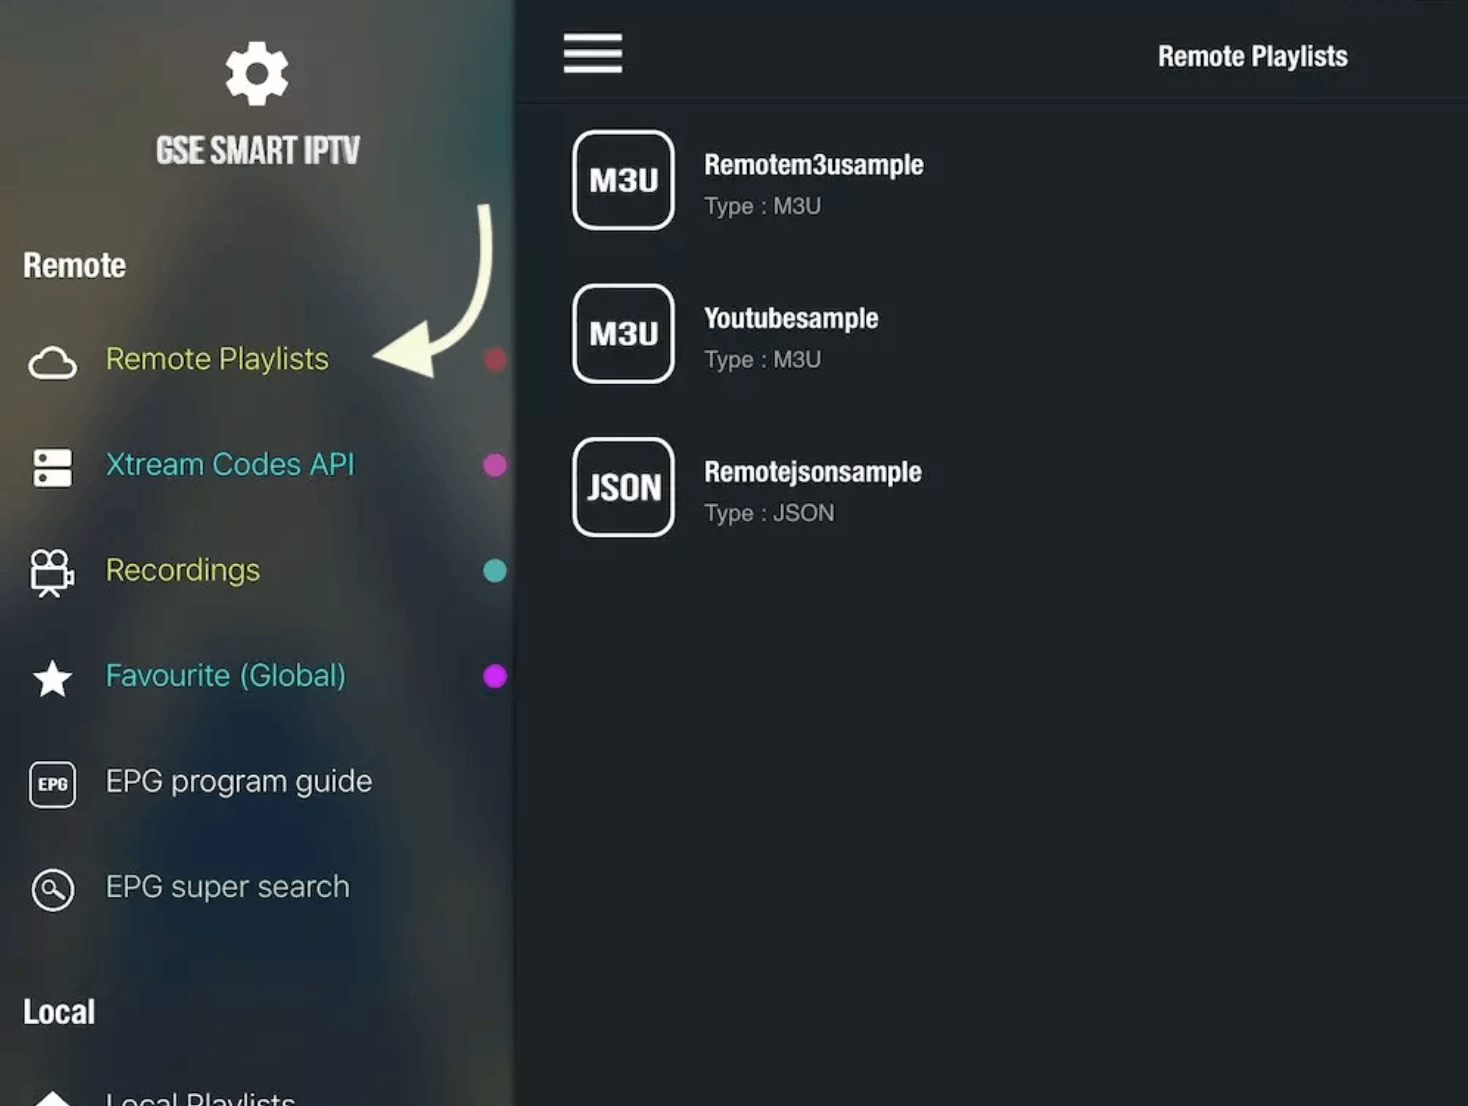 Select Remote Playlist